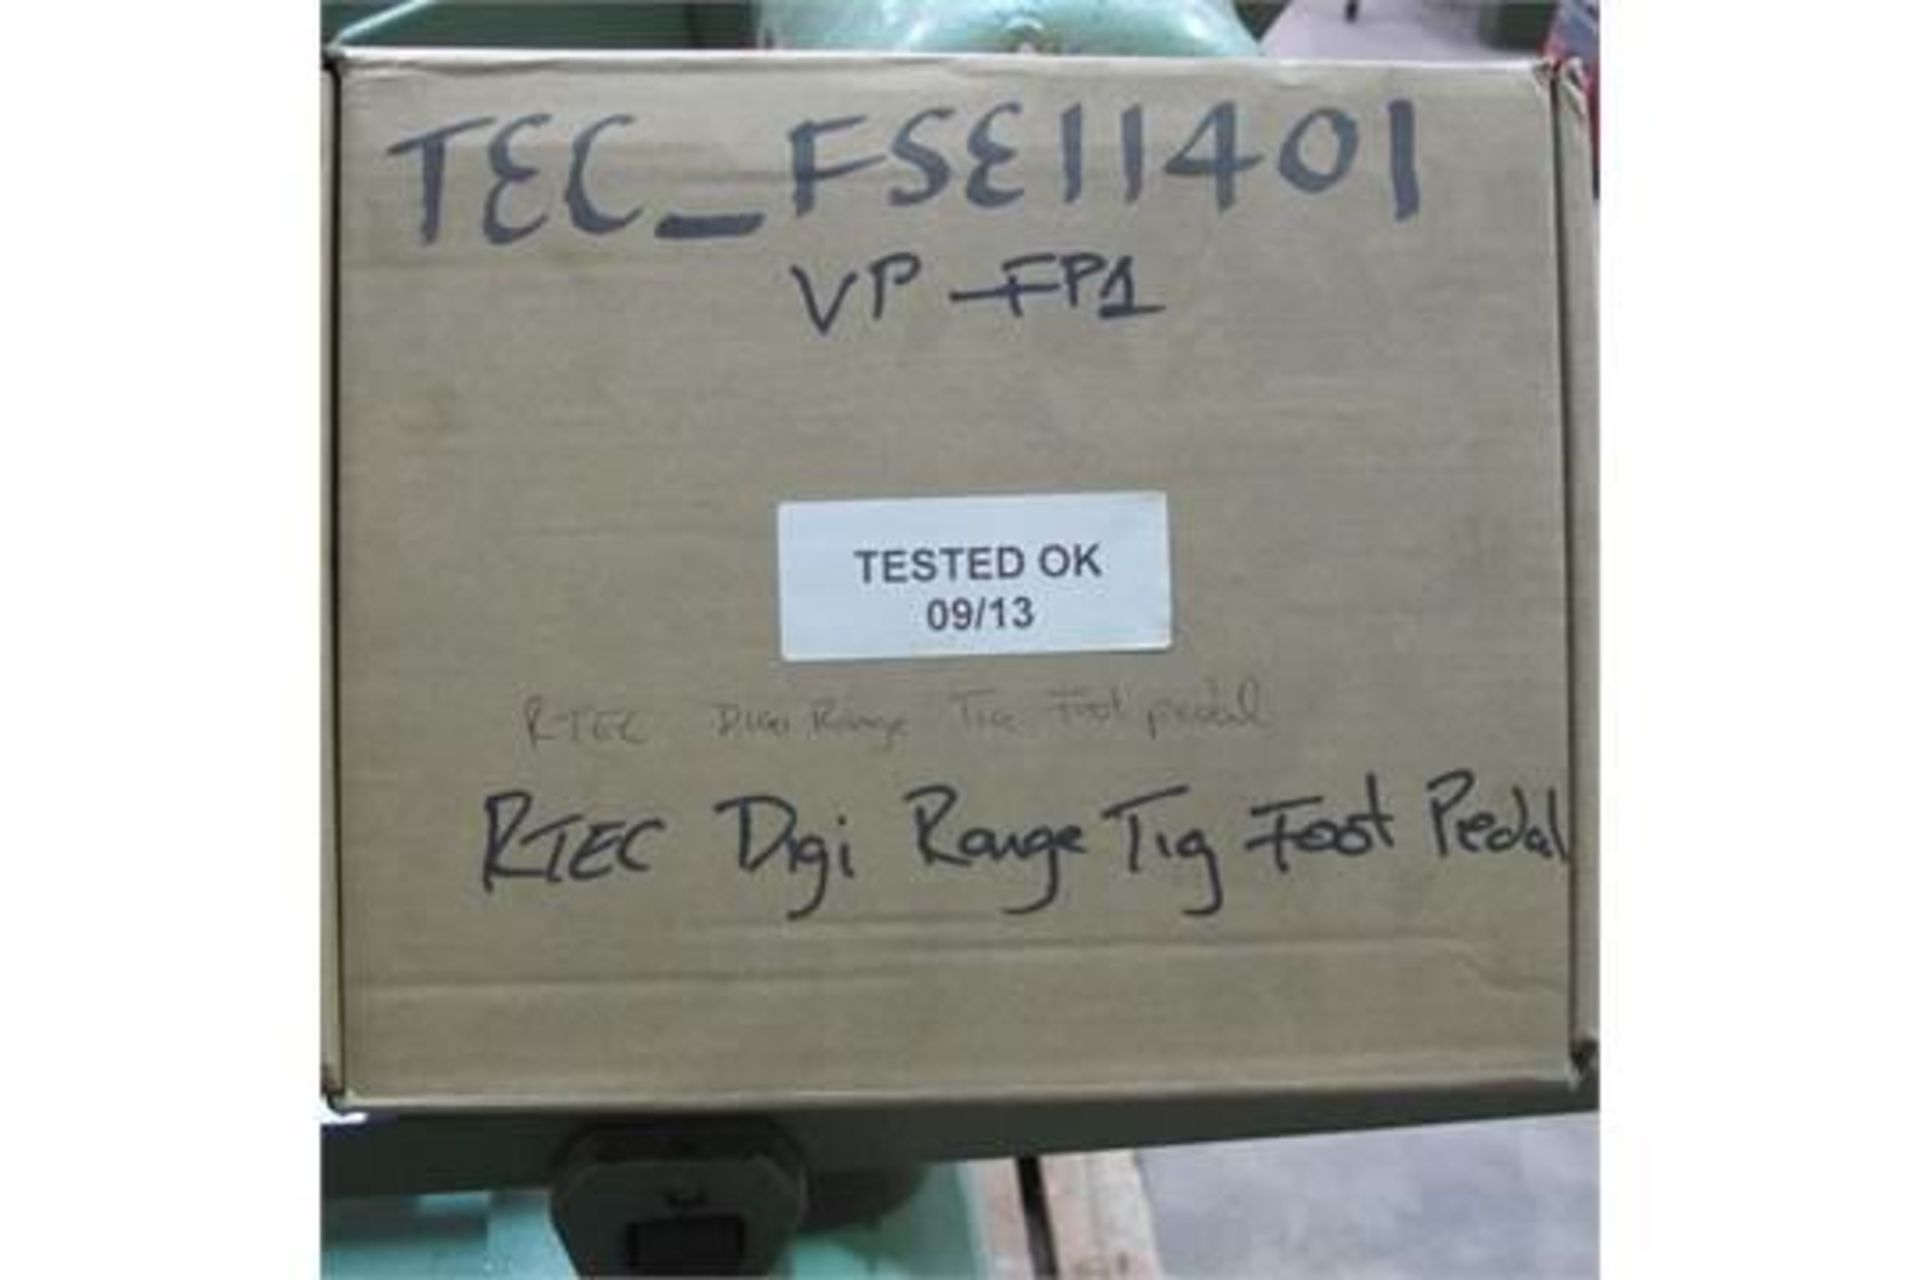 * New R-Tech Digi Range TIG Welder Foot Pedal, serial number VP-FP1, brand new, boxed - Image 6 of 7